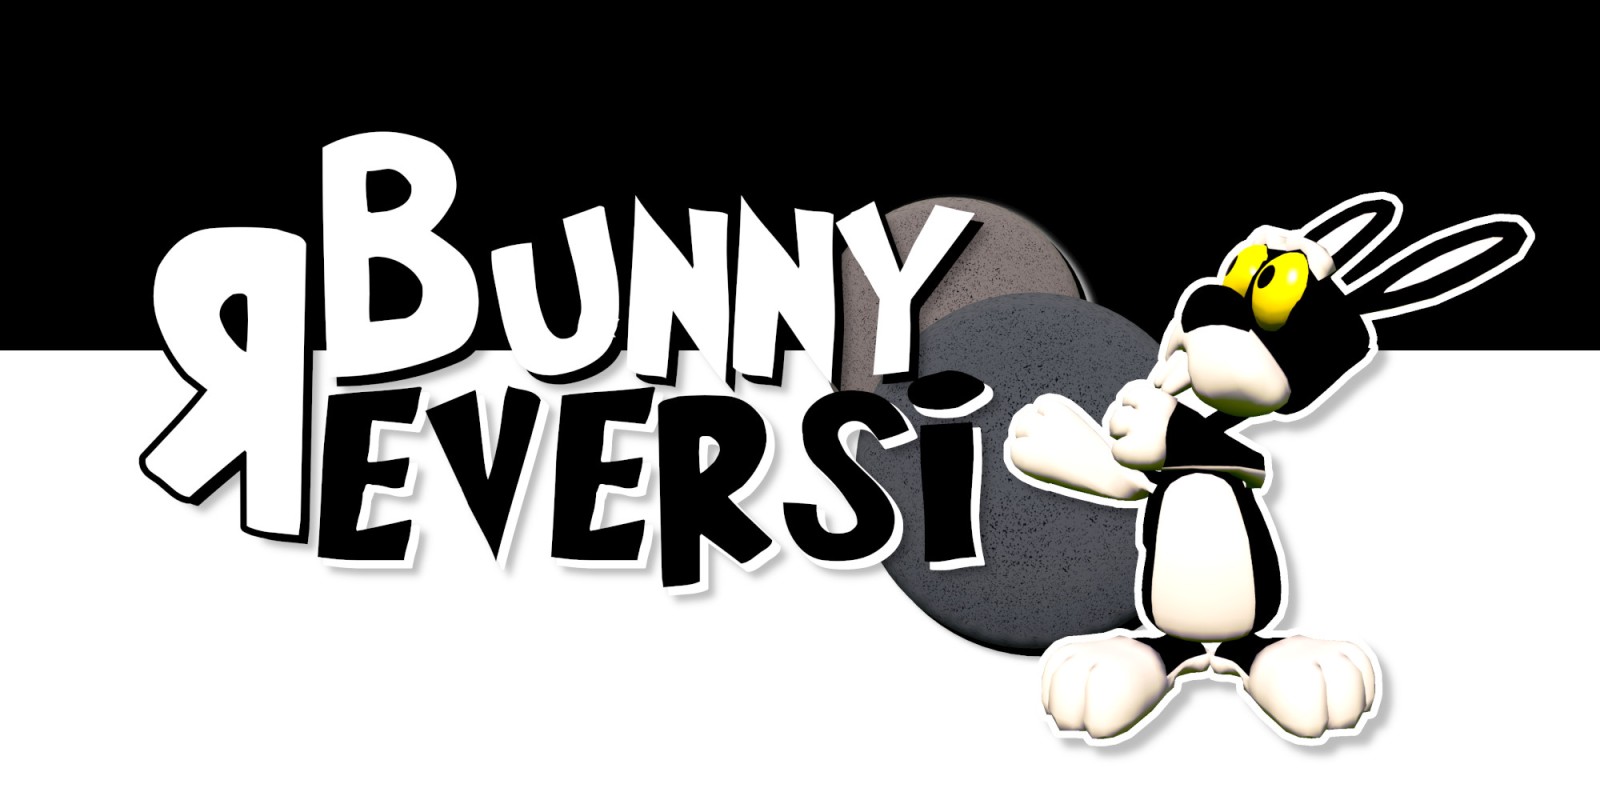 Bunny Reversi